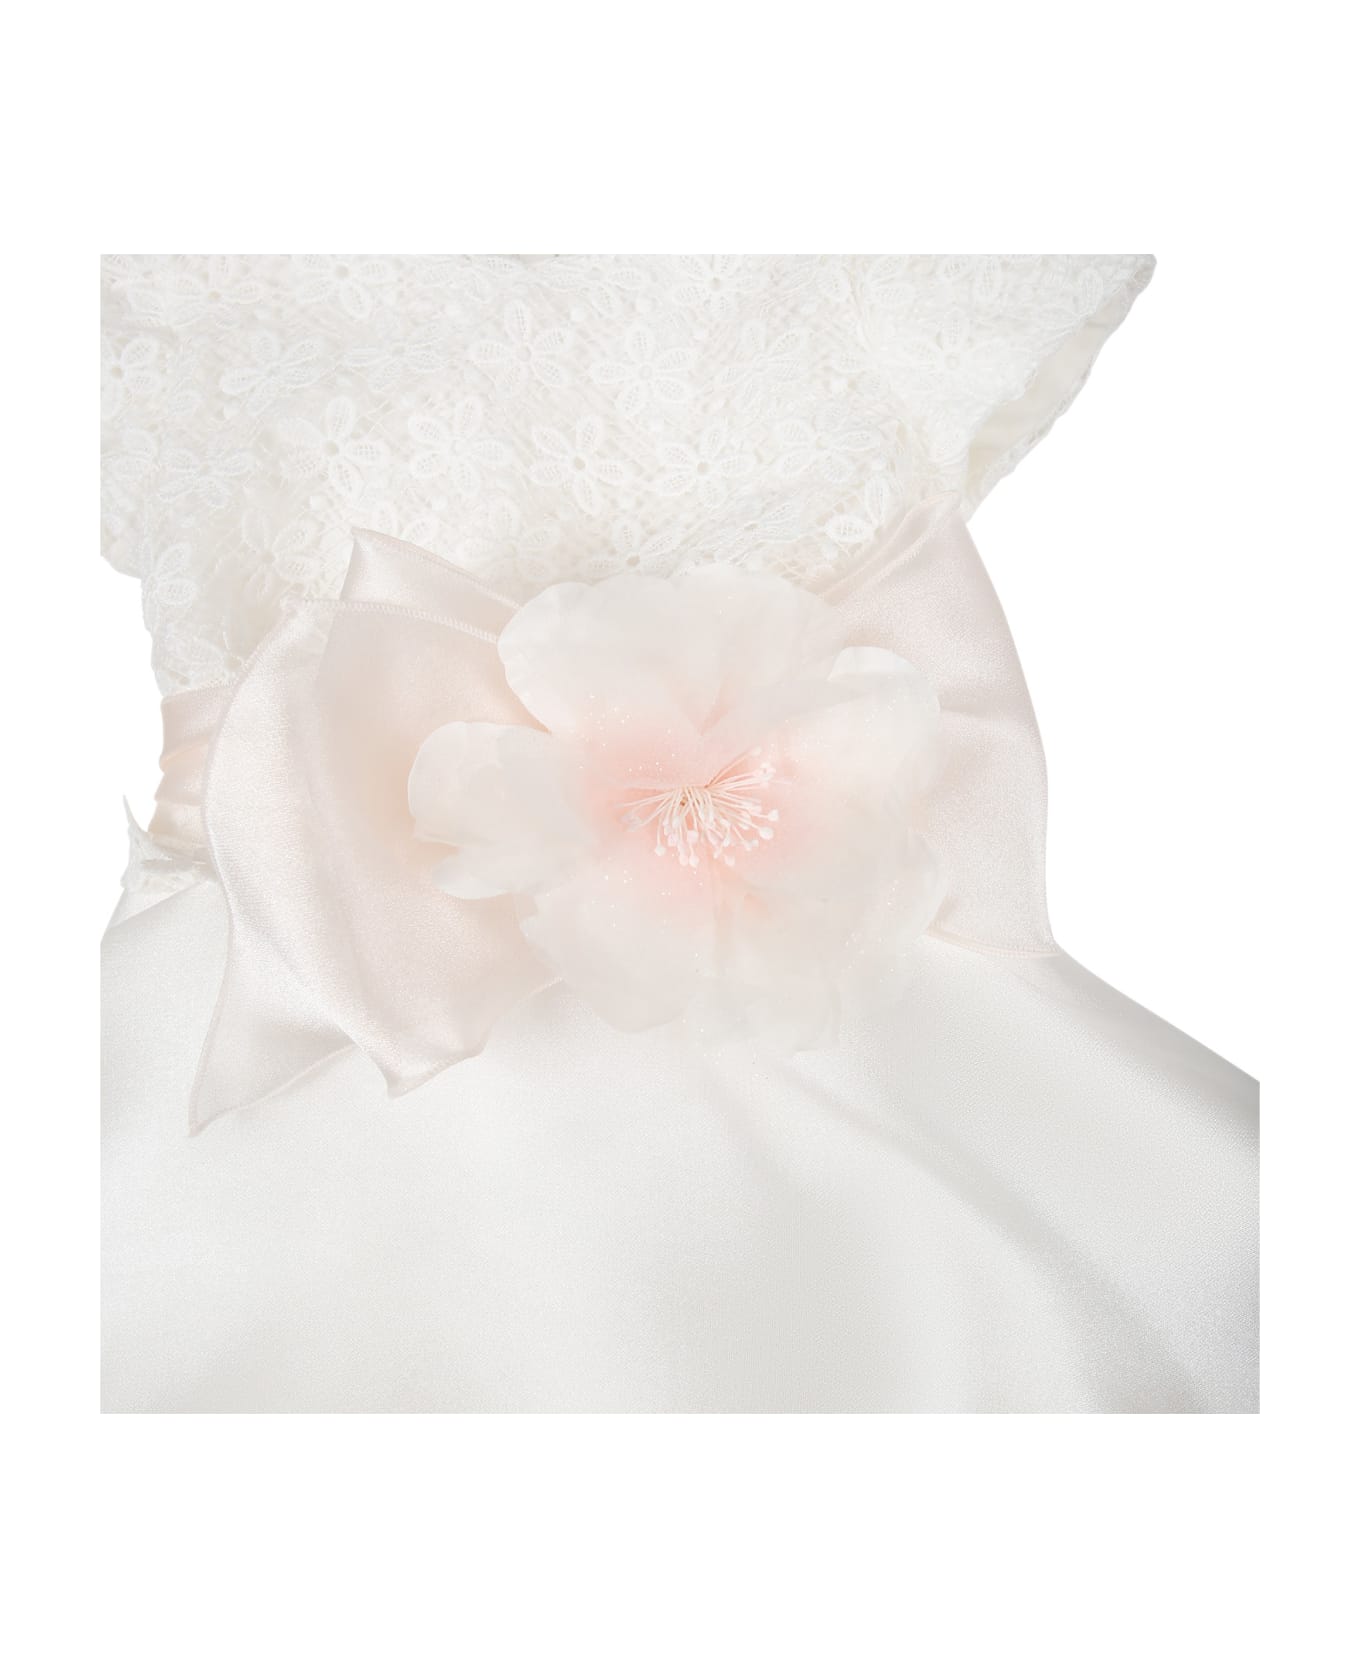 Monnalisa White Dress For Baby Girl With Flower - White